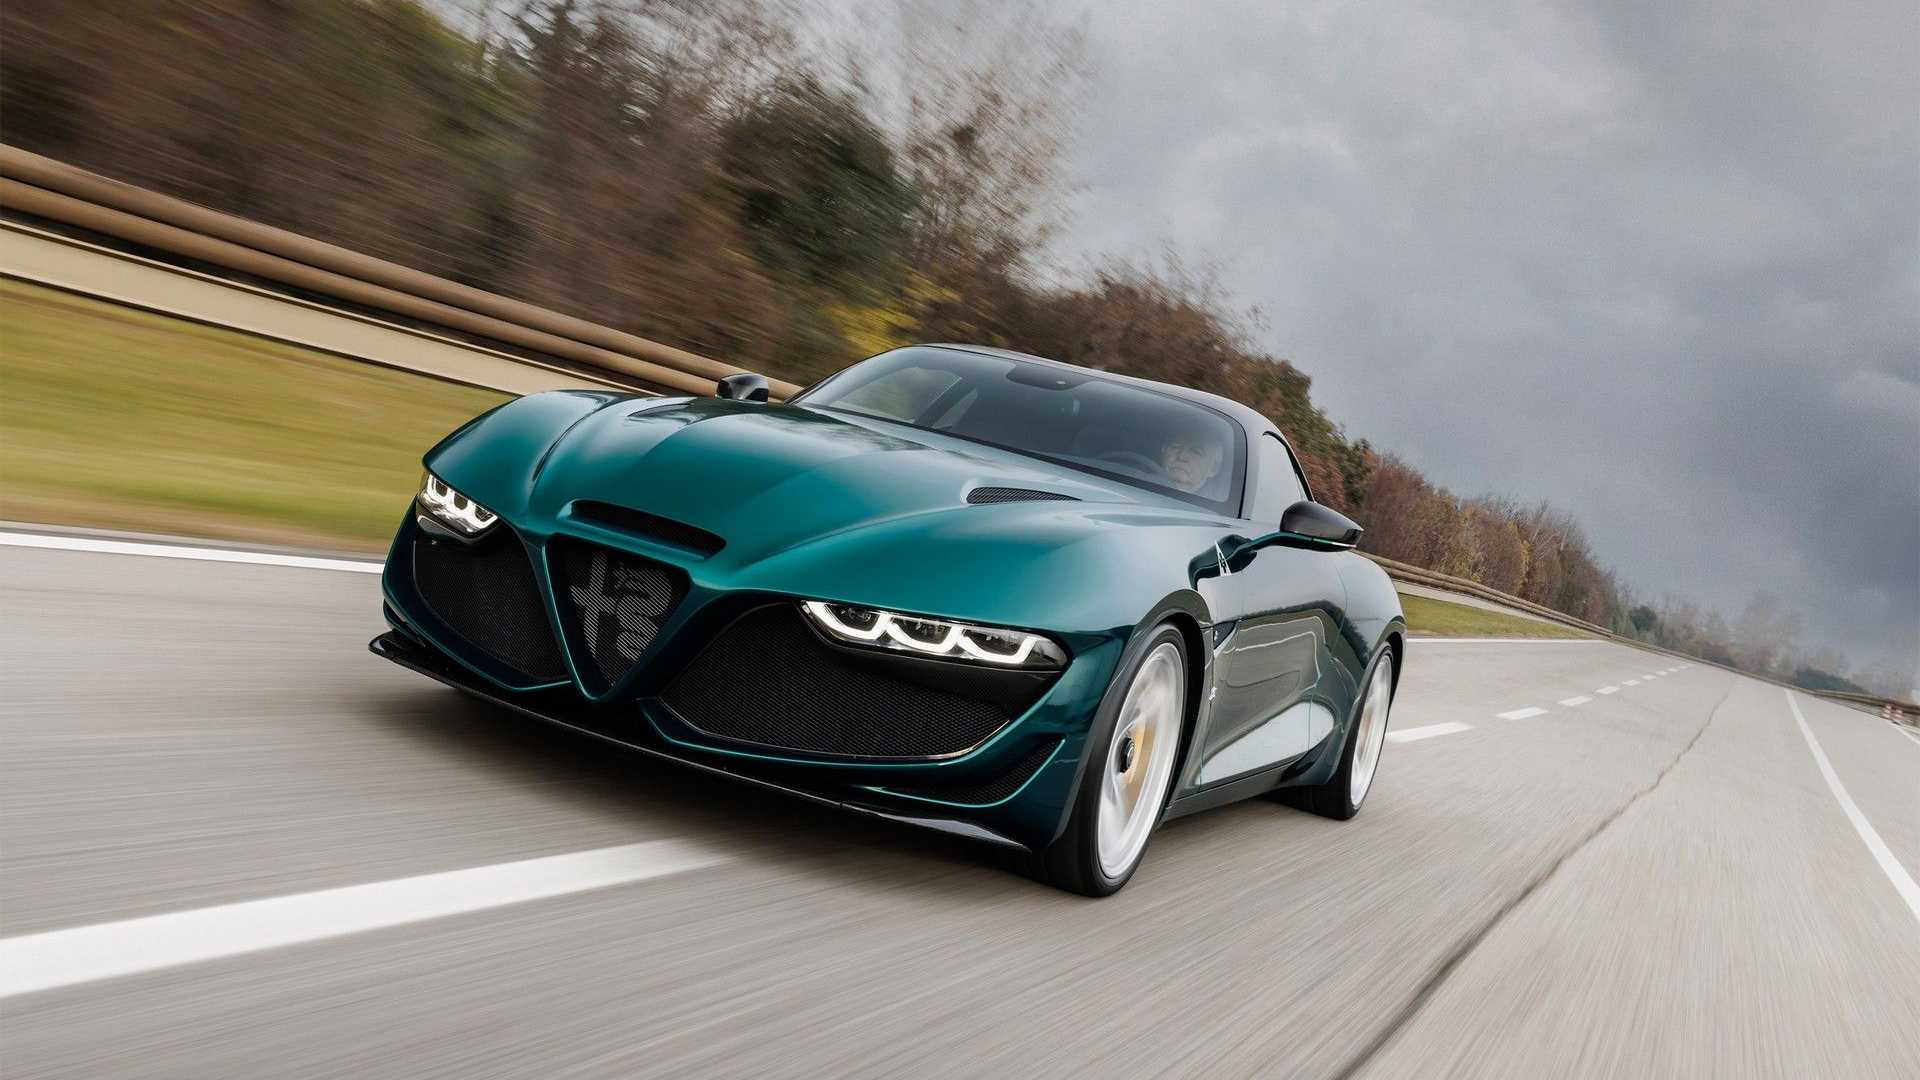 Alfa Romeo презентовал лимитированный Giulia SWB Zagato на механике